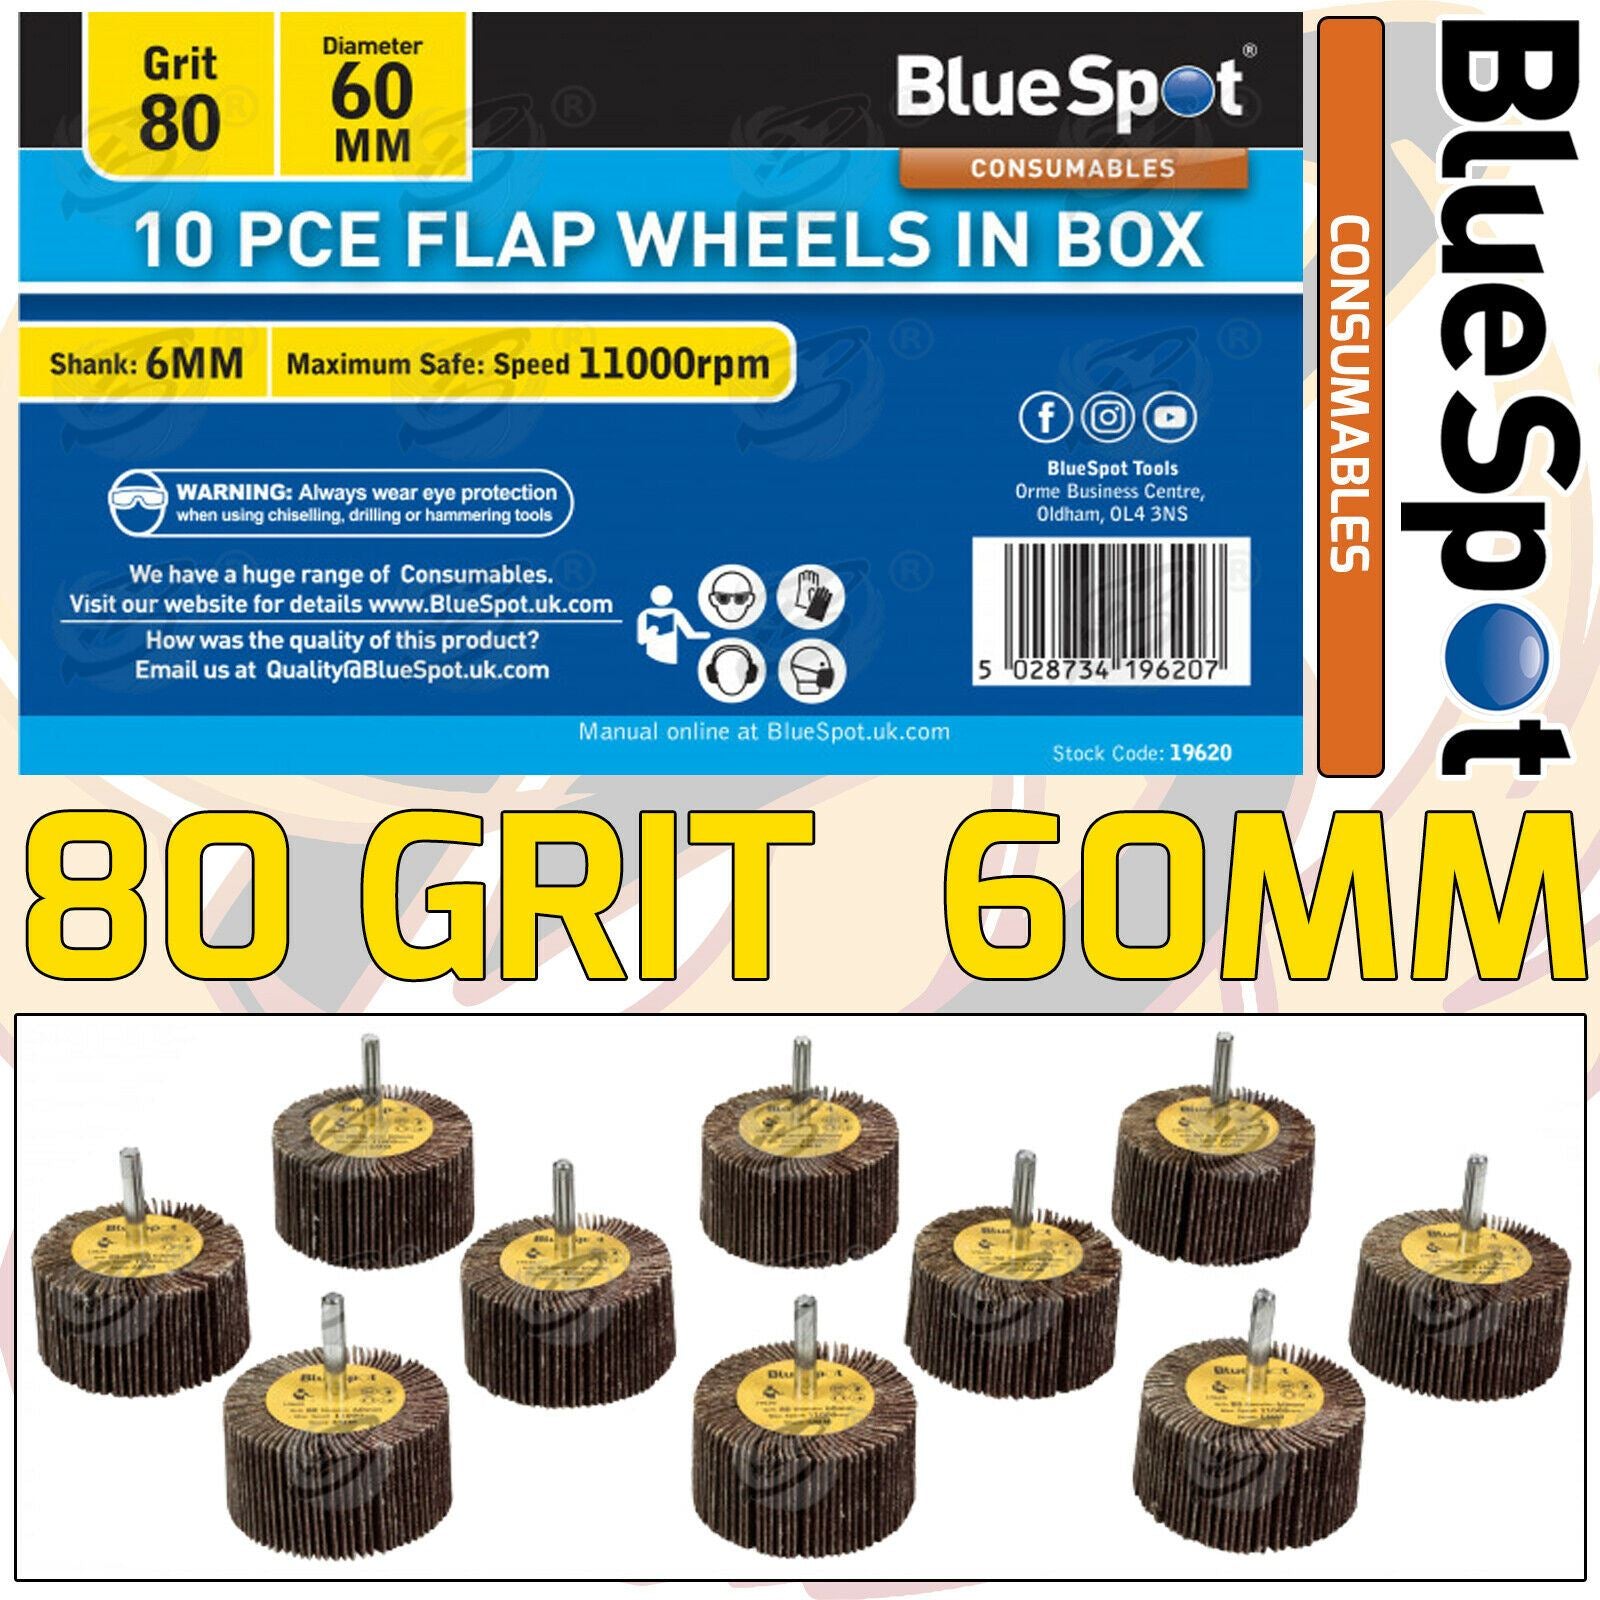 BLUESPOT 10PCS FLAP WHEEL DISCS ( 80 GRIT - 60MM )